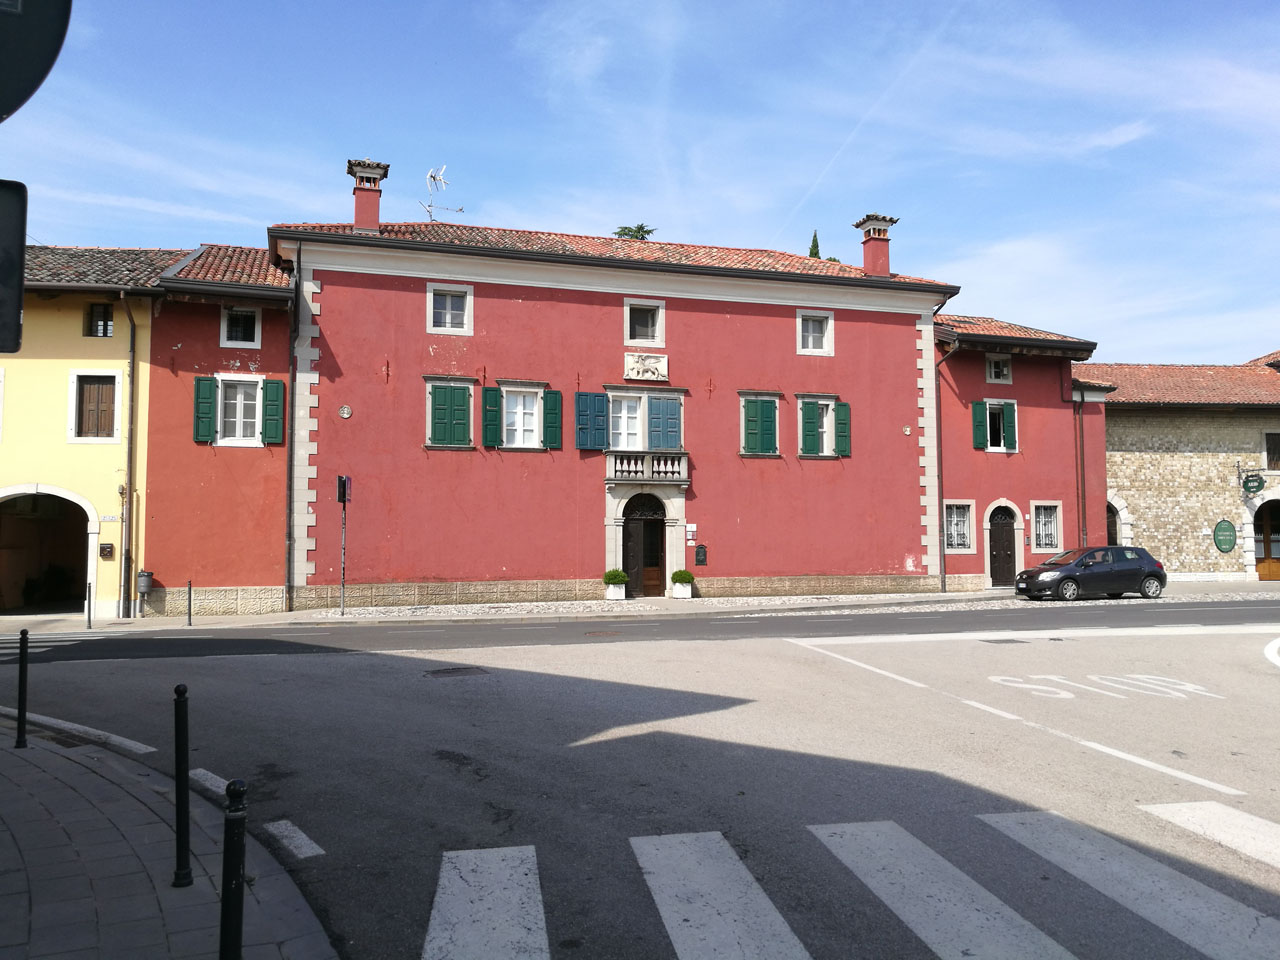 Villa Ariis (villa, padronale) - Trivignano Udinese (UD) 